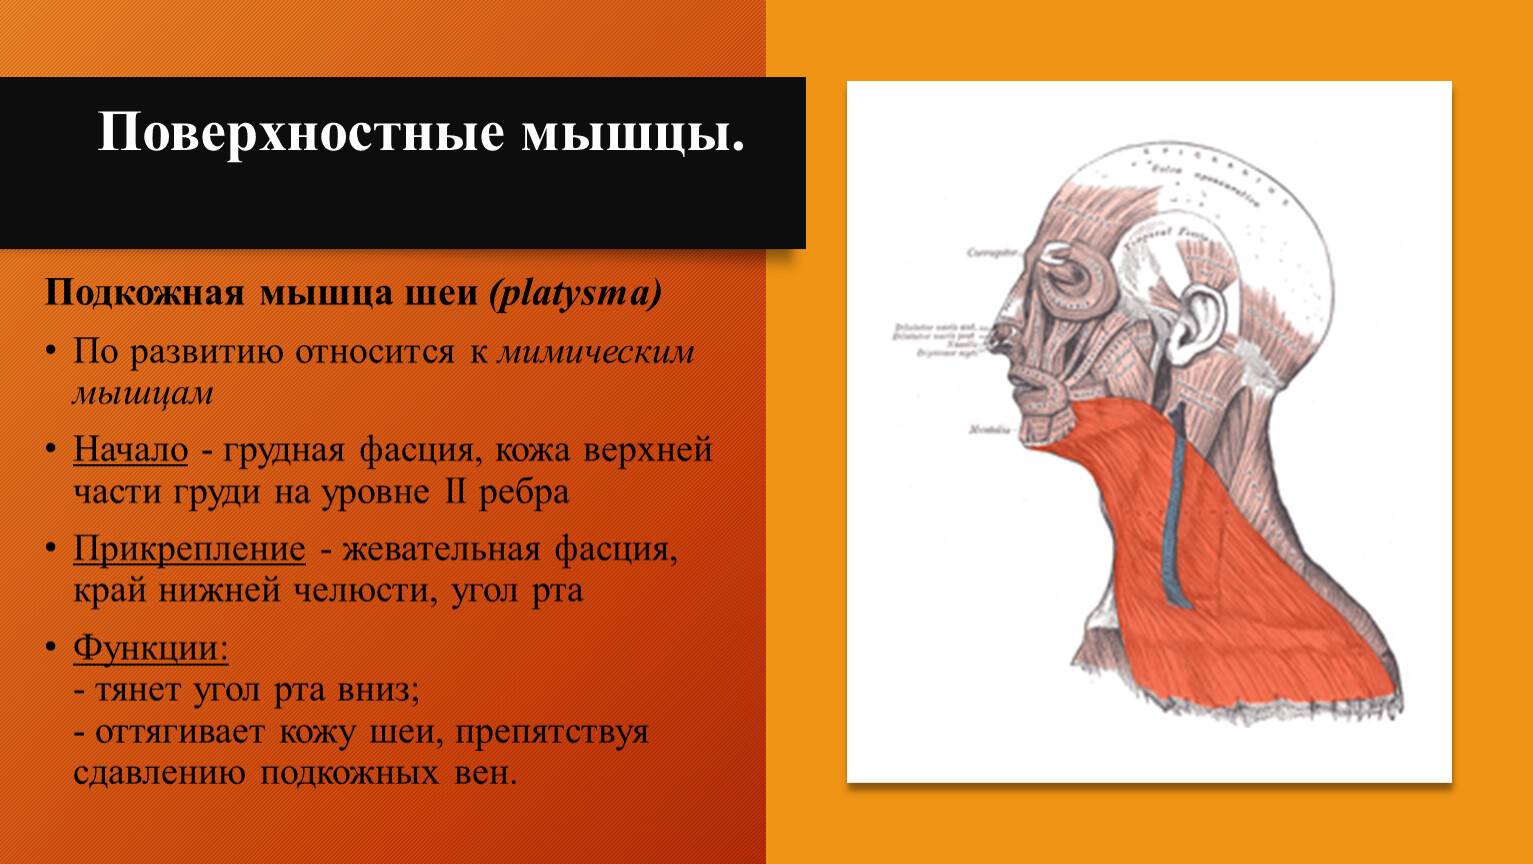 Ксеомин: коррекция нижней трети лица | портал 1nep.ru